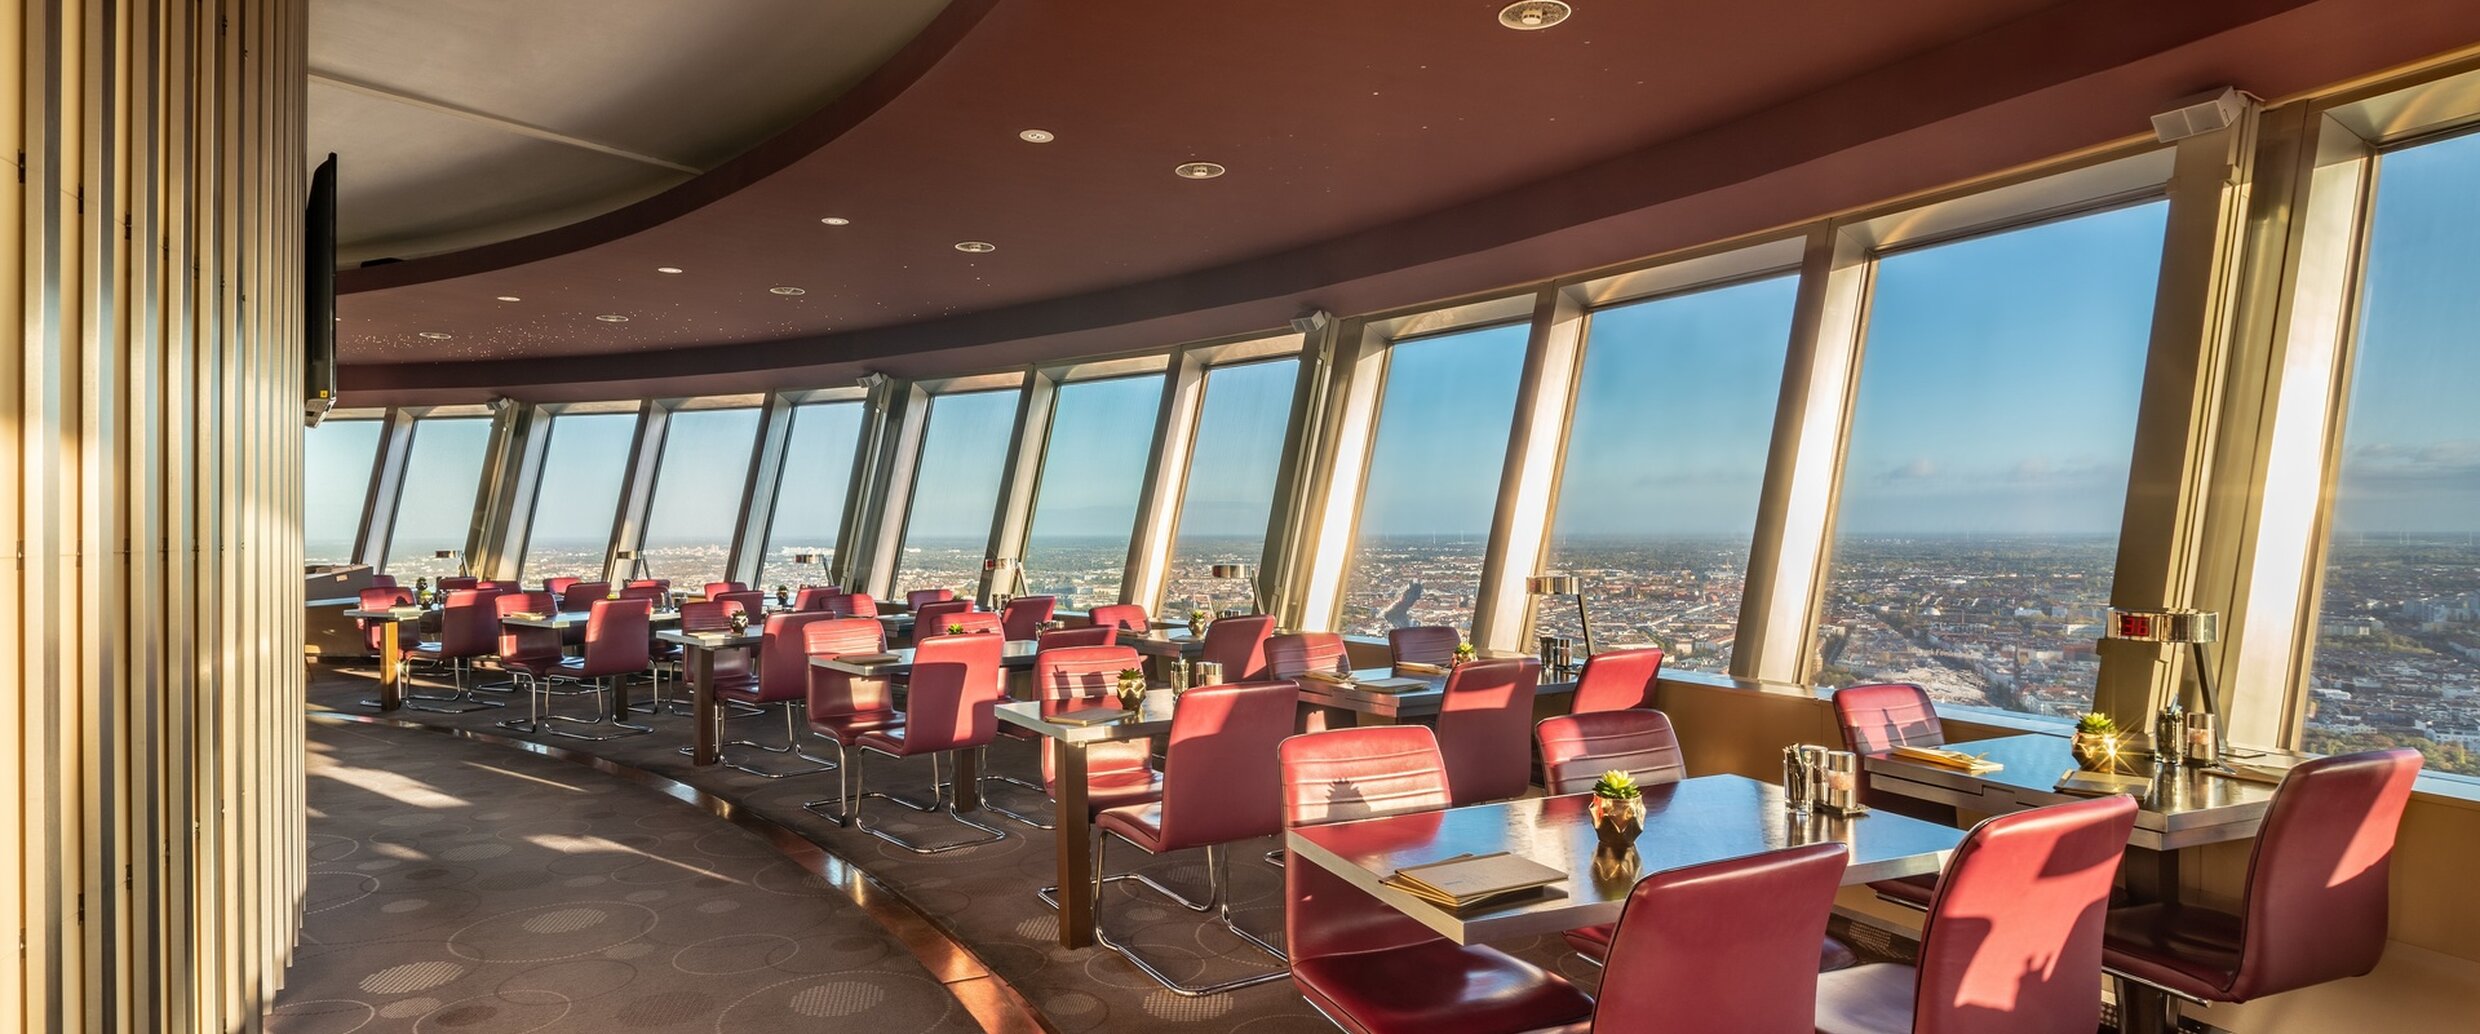 Berlin TV-Tower: Restaurant Sphere Window Table Reservation